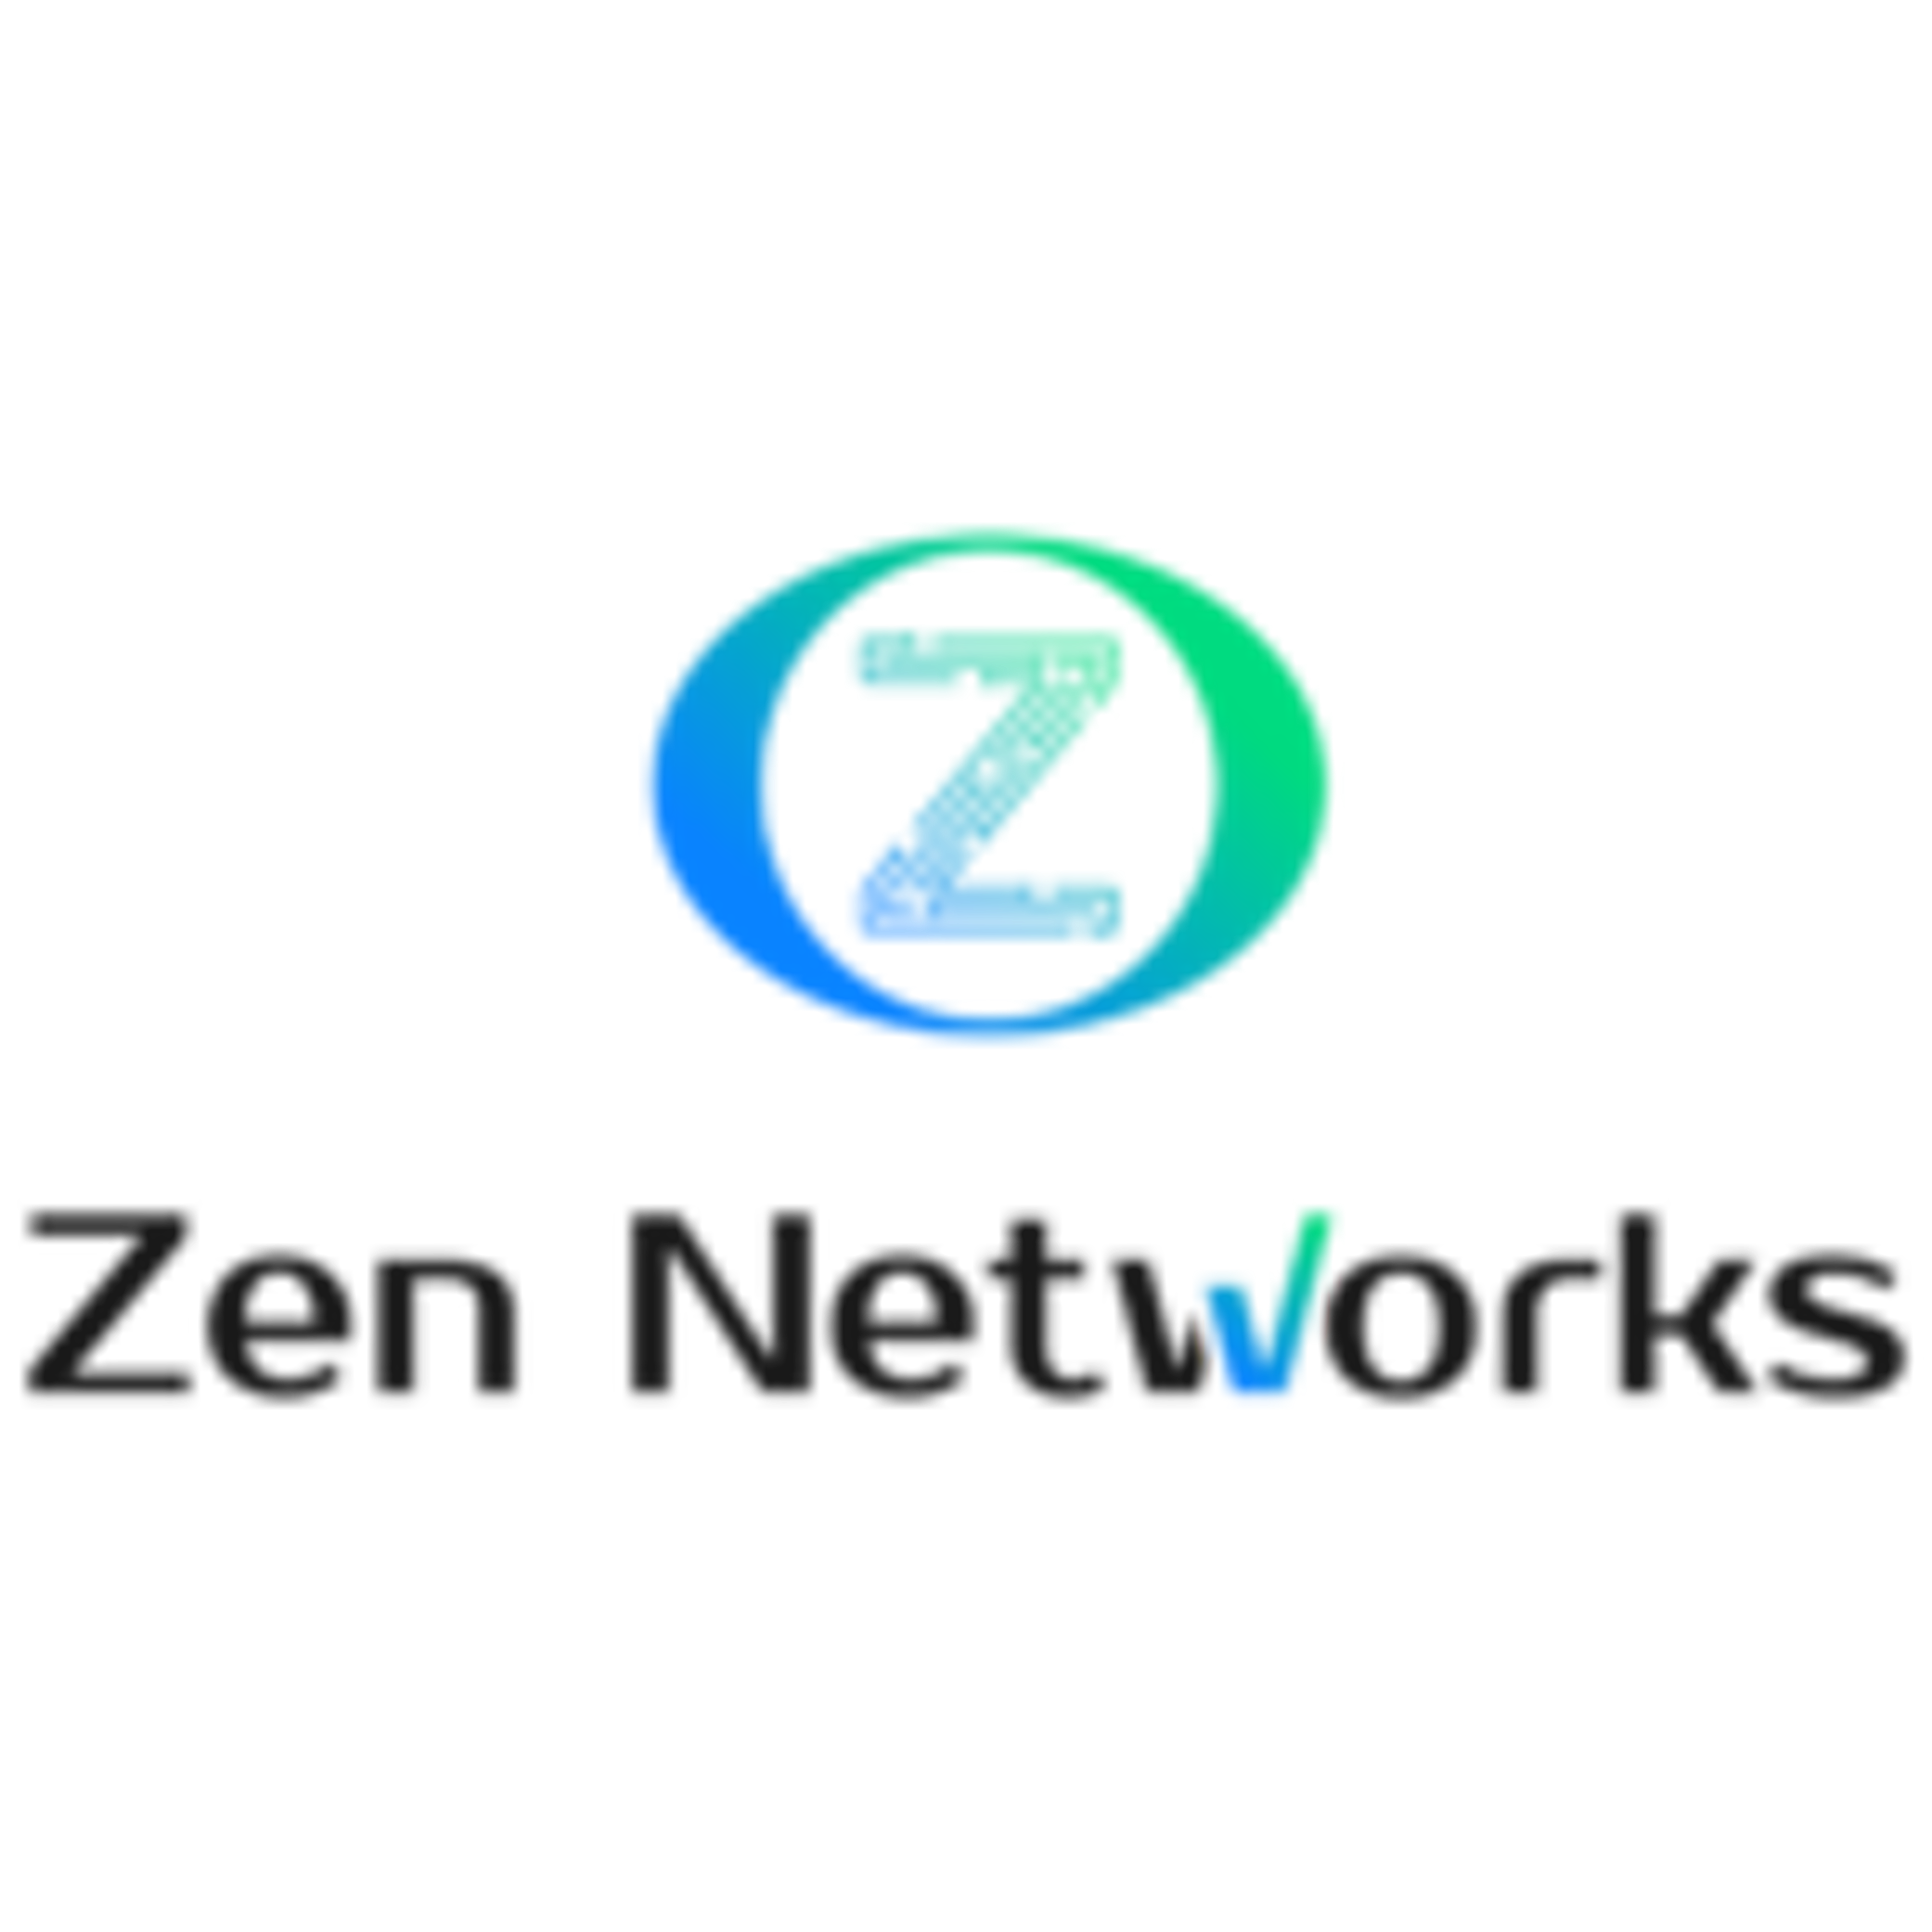 Zen-networks.io